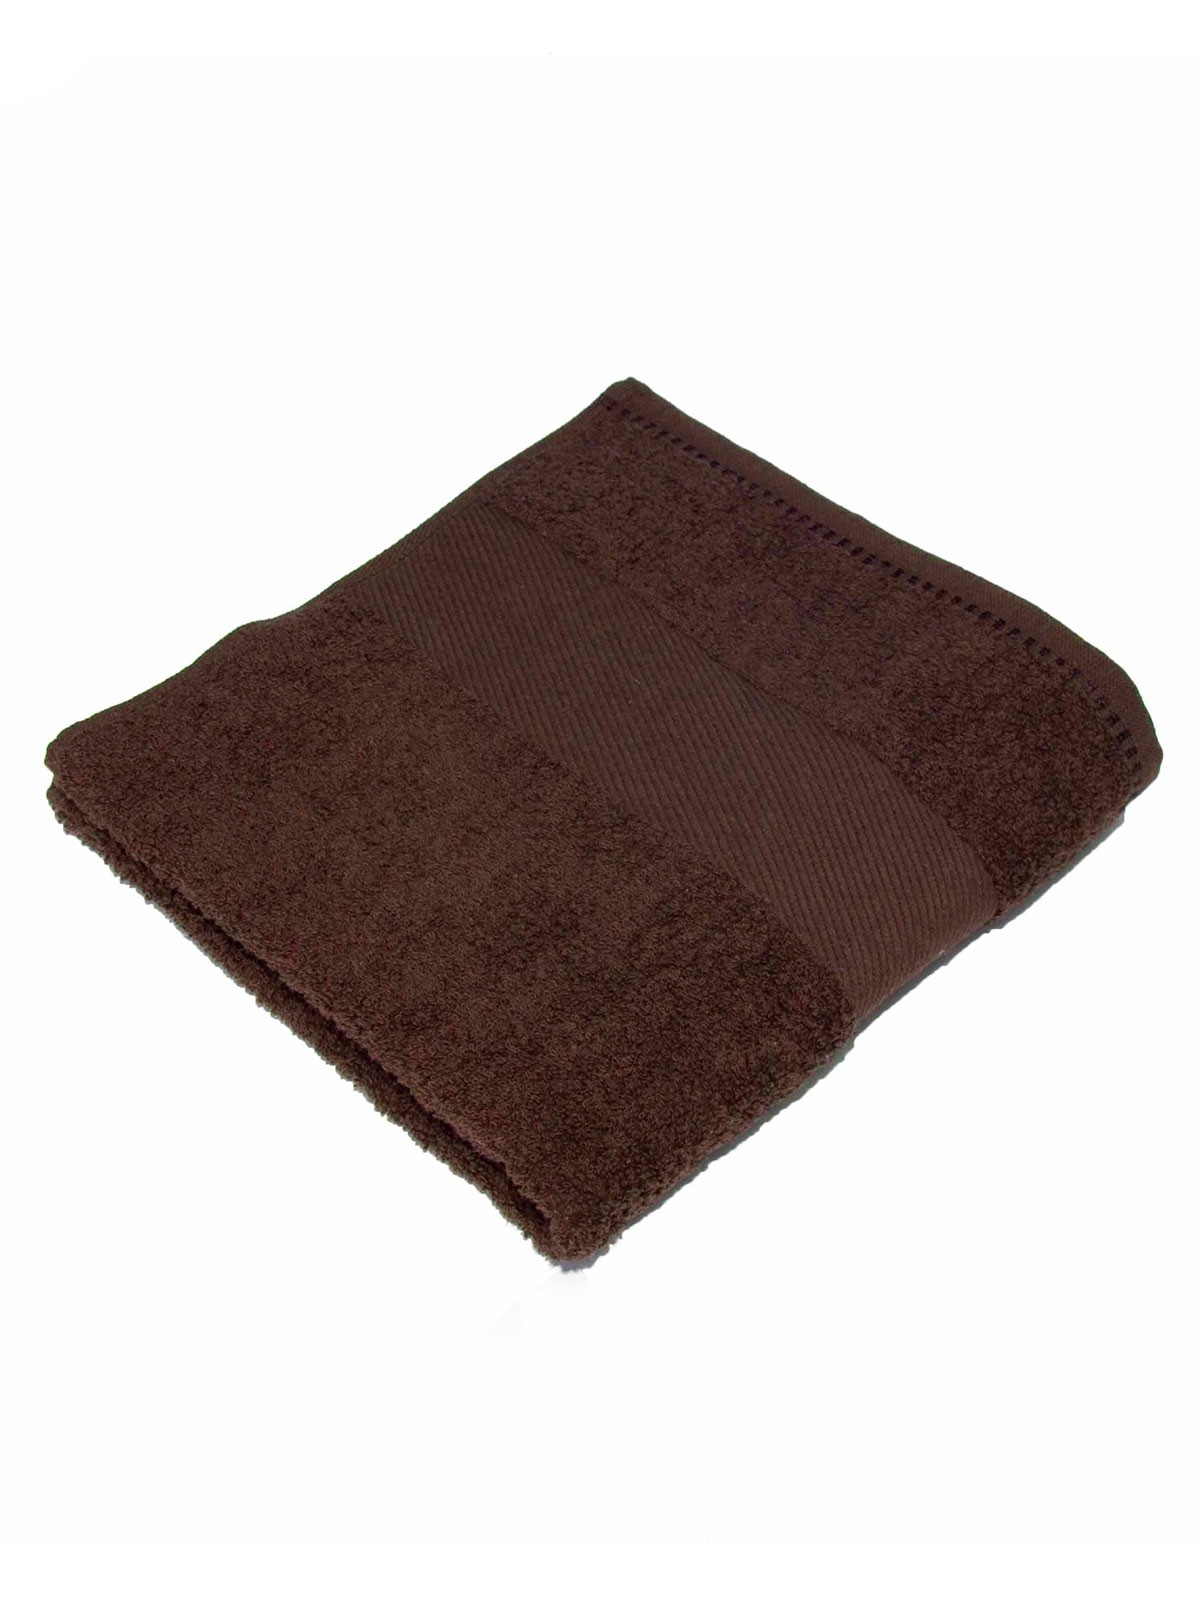 classic-towel-70x140-chocolate.webp